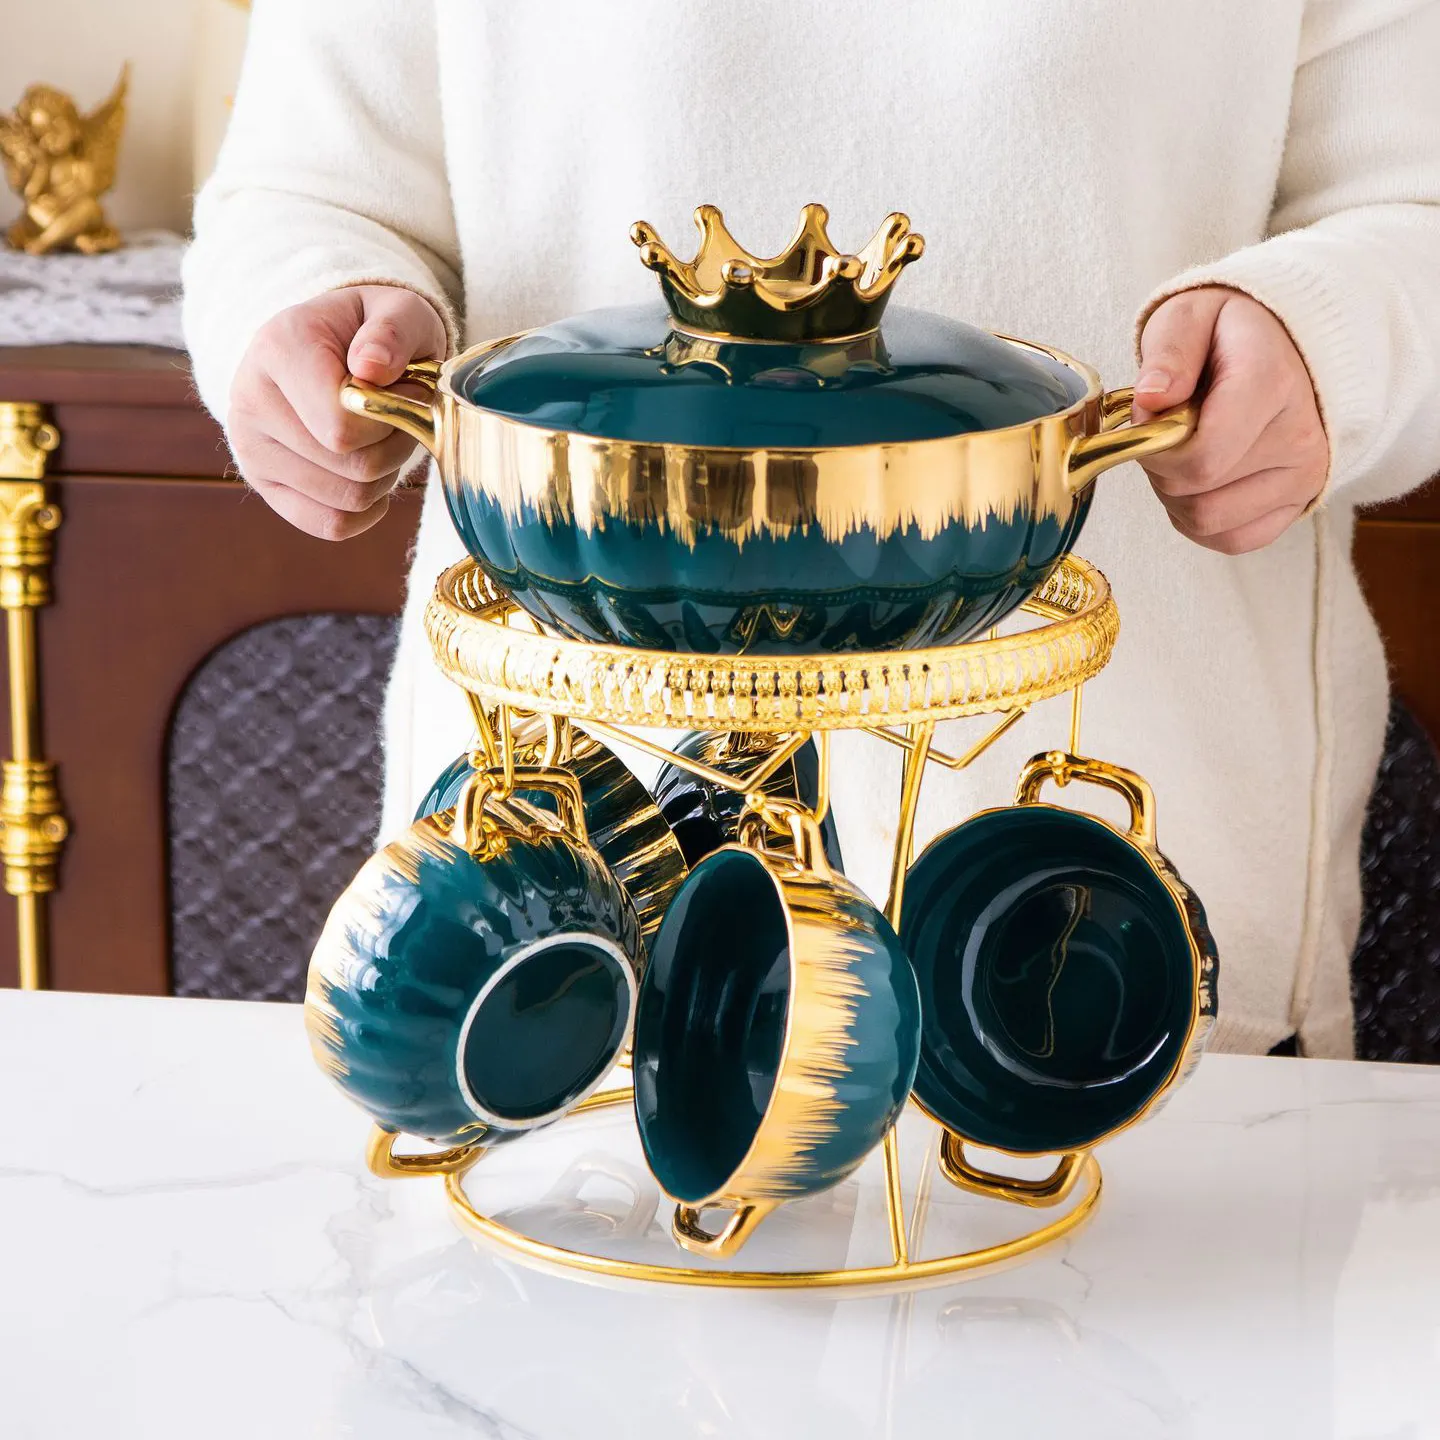 NISEVEN Set panci sup keramik, Set panci sup keramik tepi berlapis emas dengan Set mangkuk